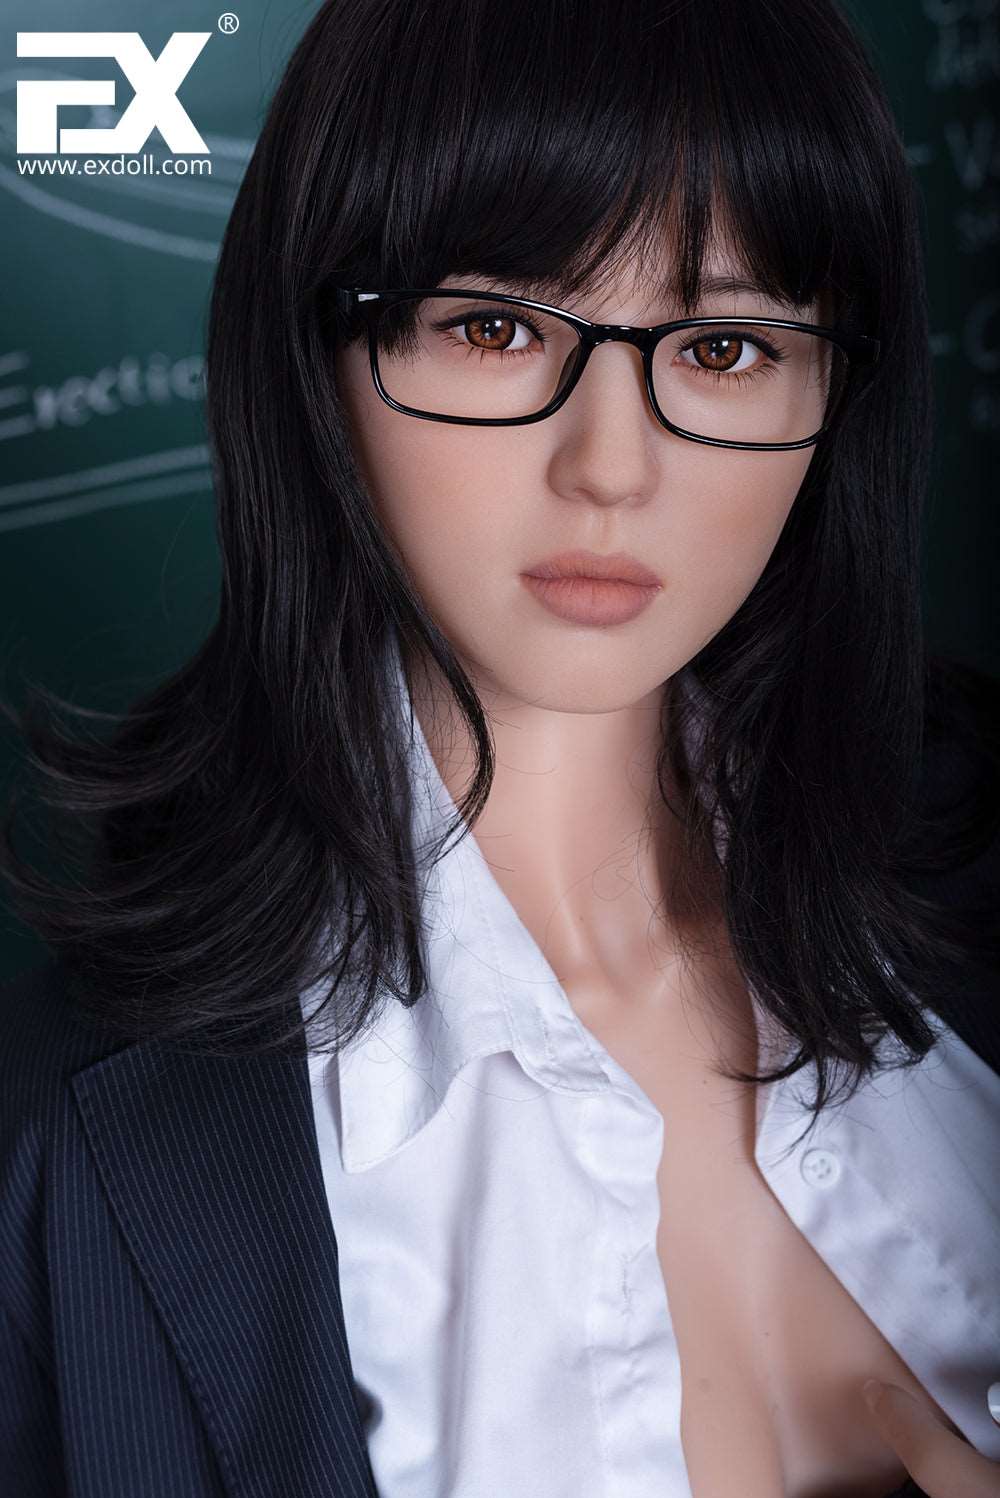 EX Doll Ukiyoe Series 170 cm Silicone - Mo Han | Sex Dolls SG